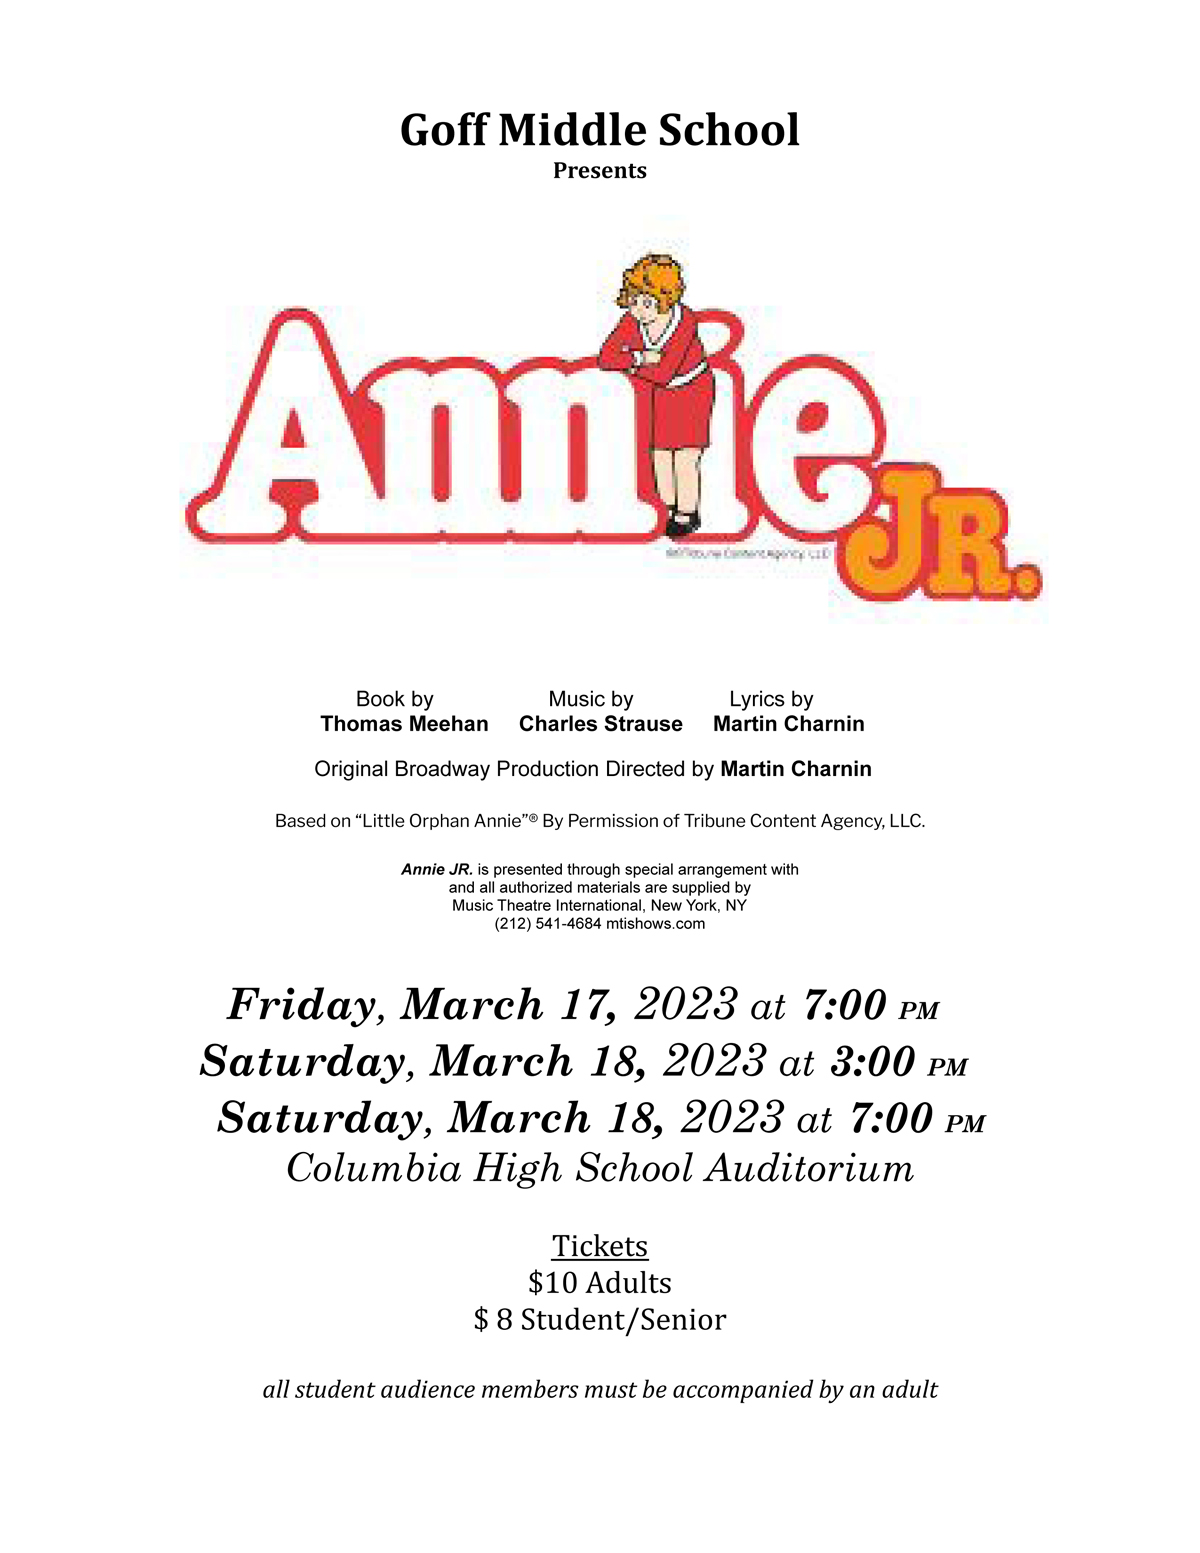 Annie Jr. poster